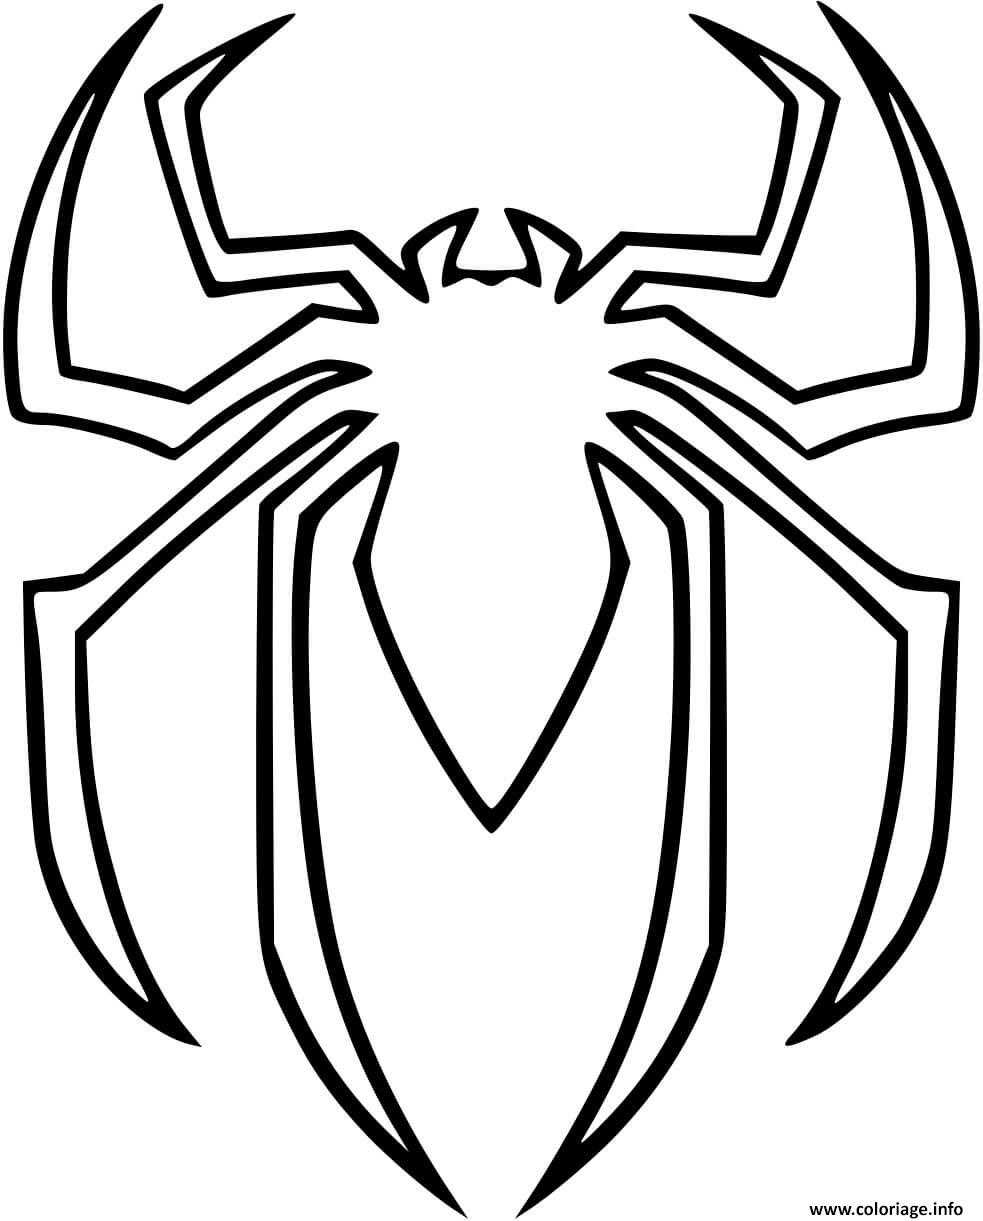 Dessin araignee spiderman logo Coloriage Gratuit à Imprimer